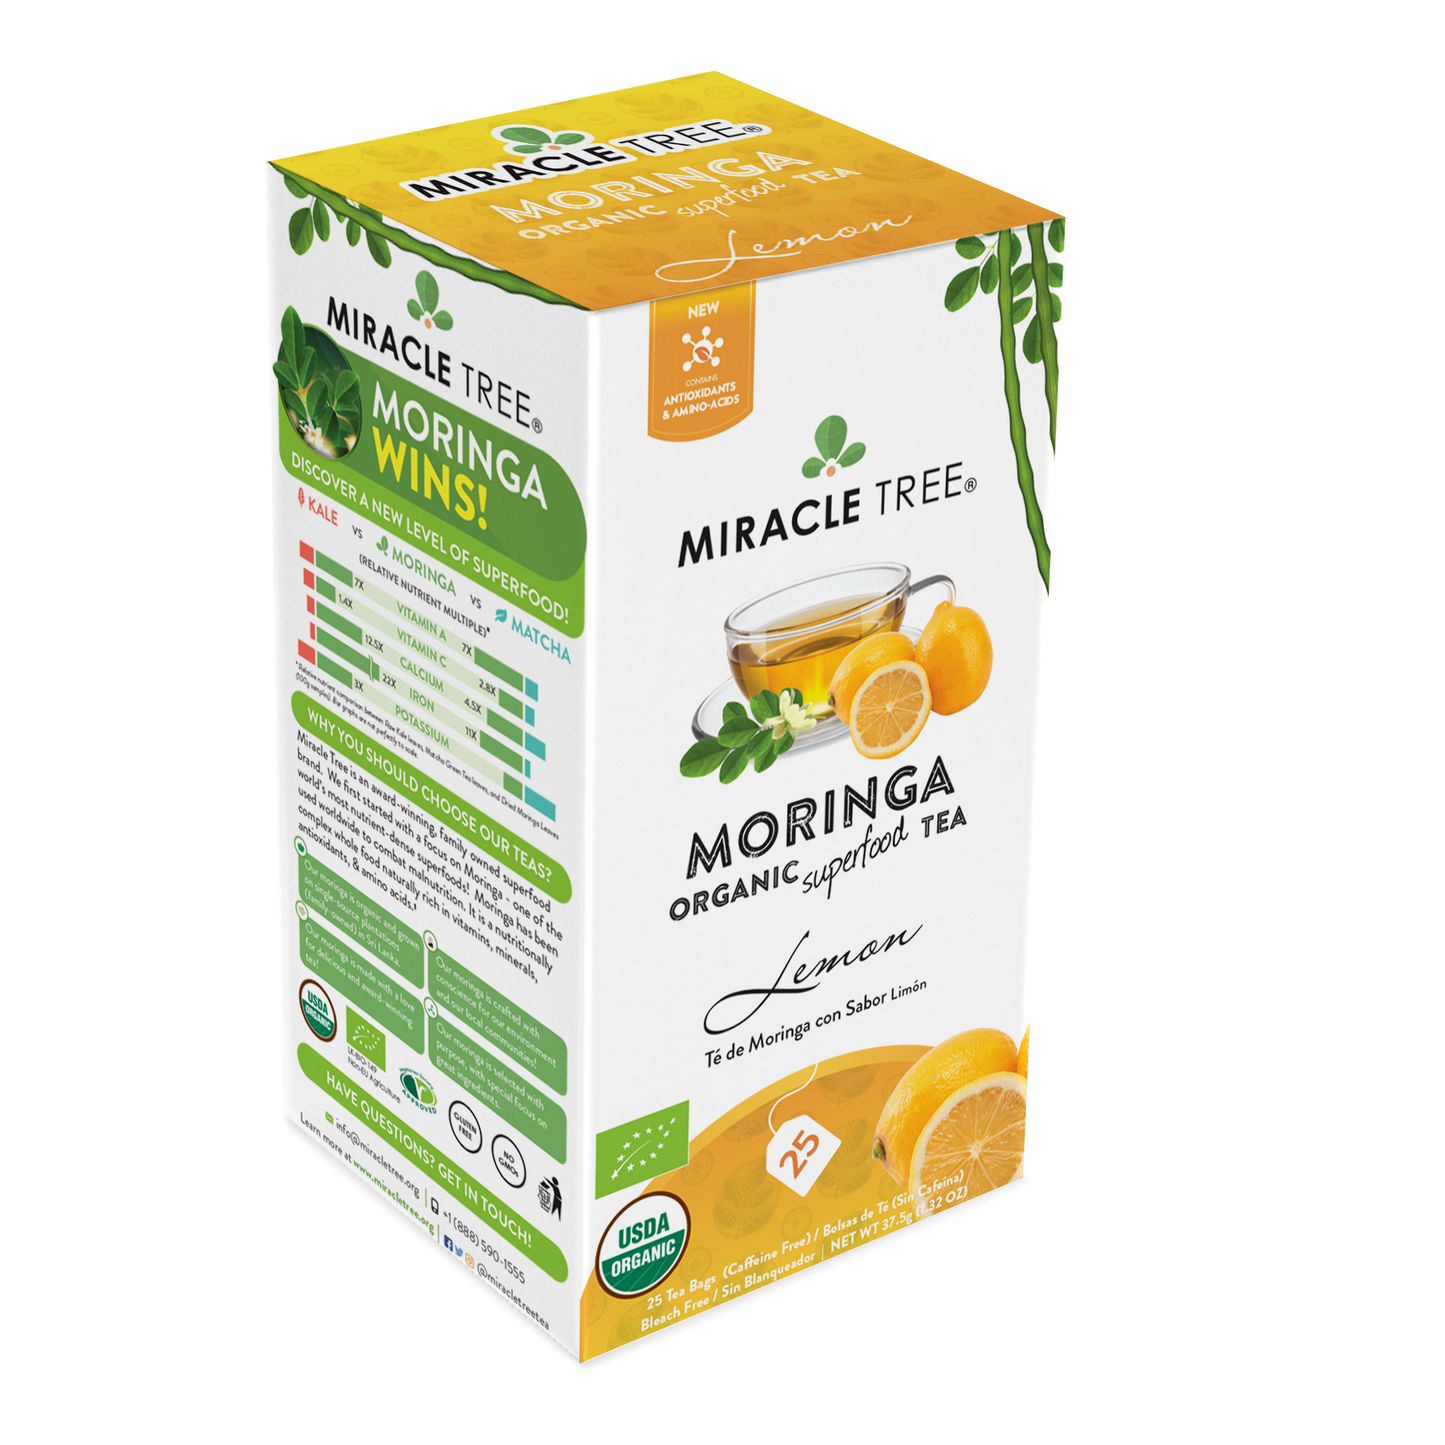 Miracle Tree Organic Moringa Tea Lemon